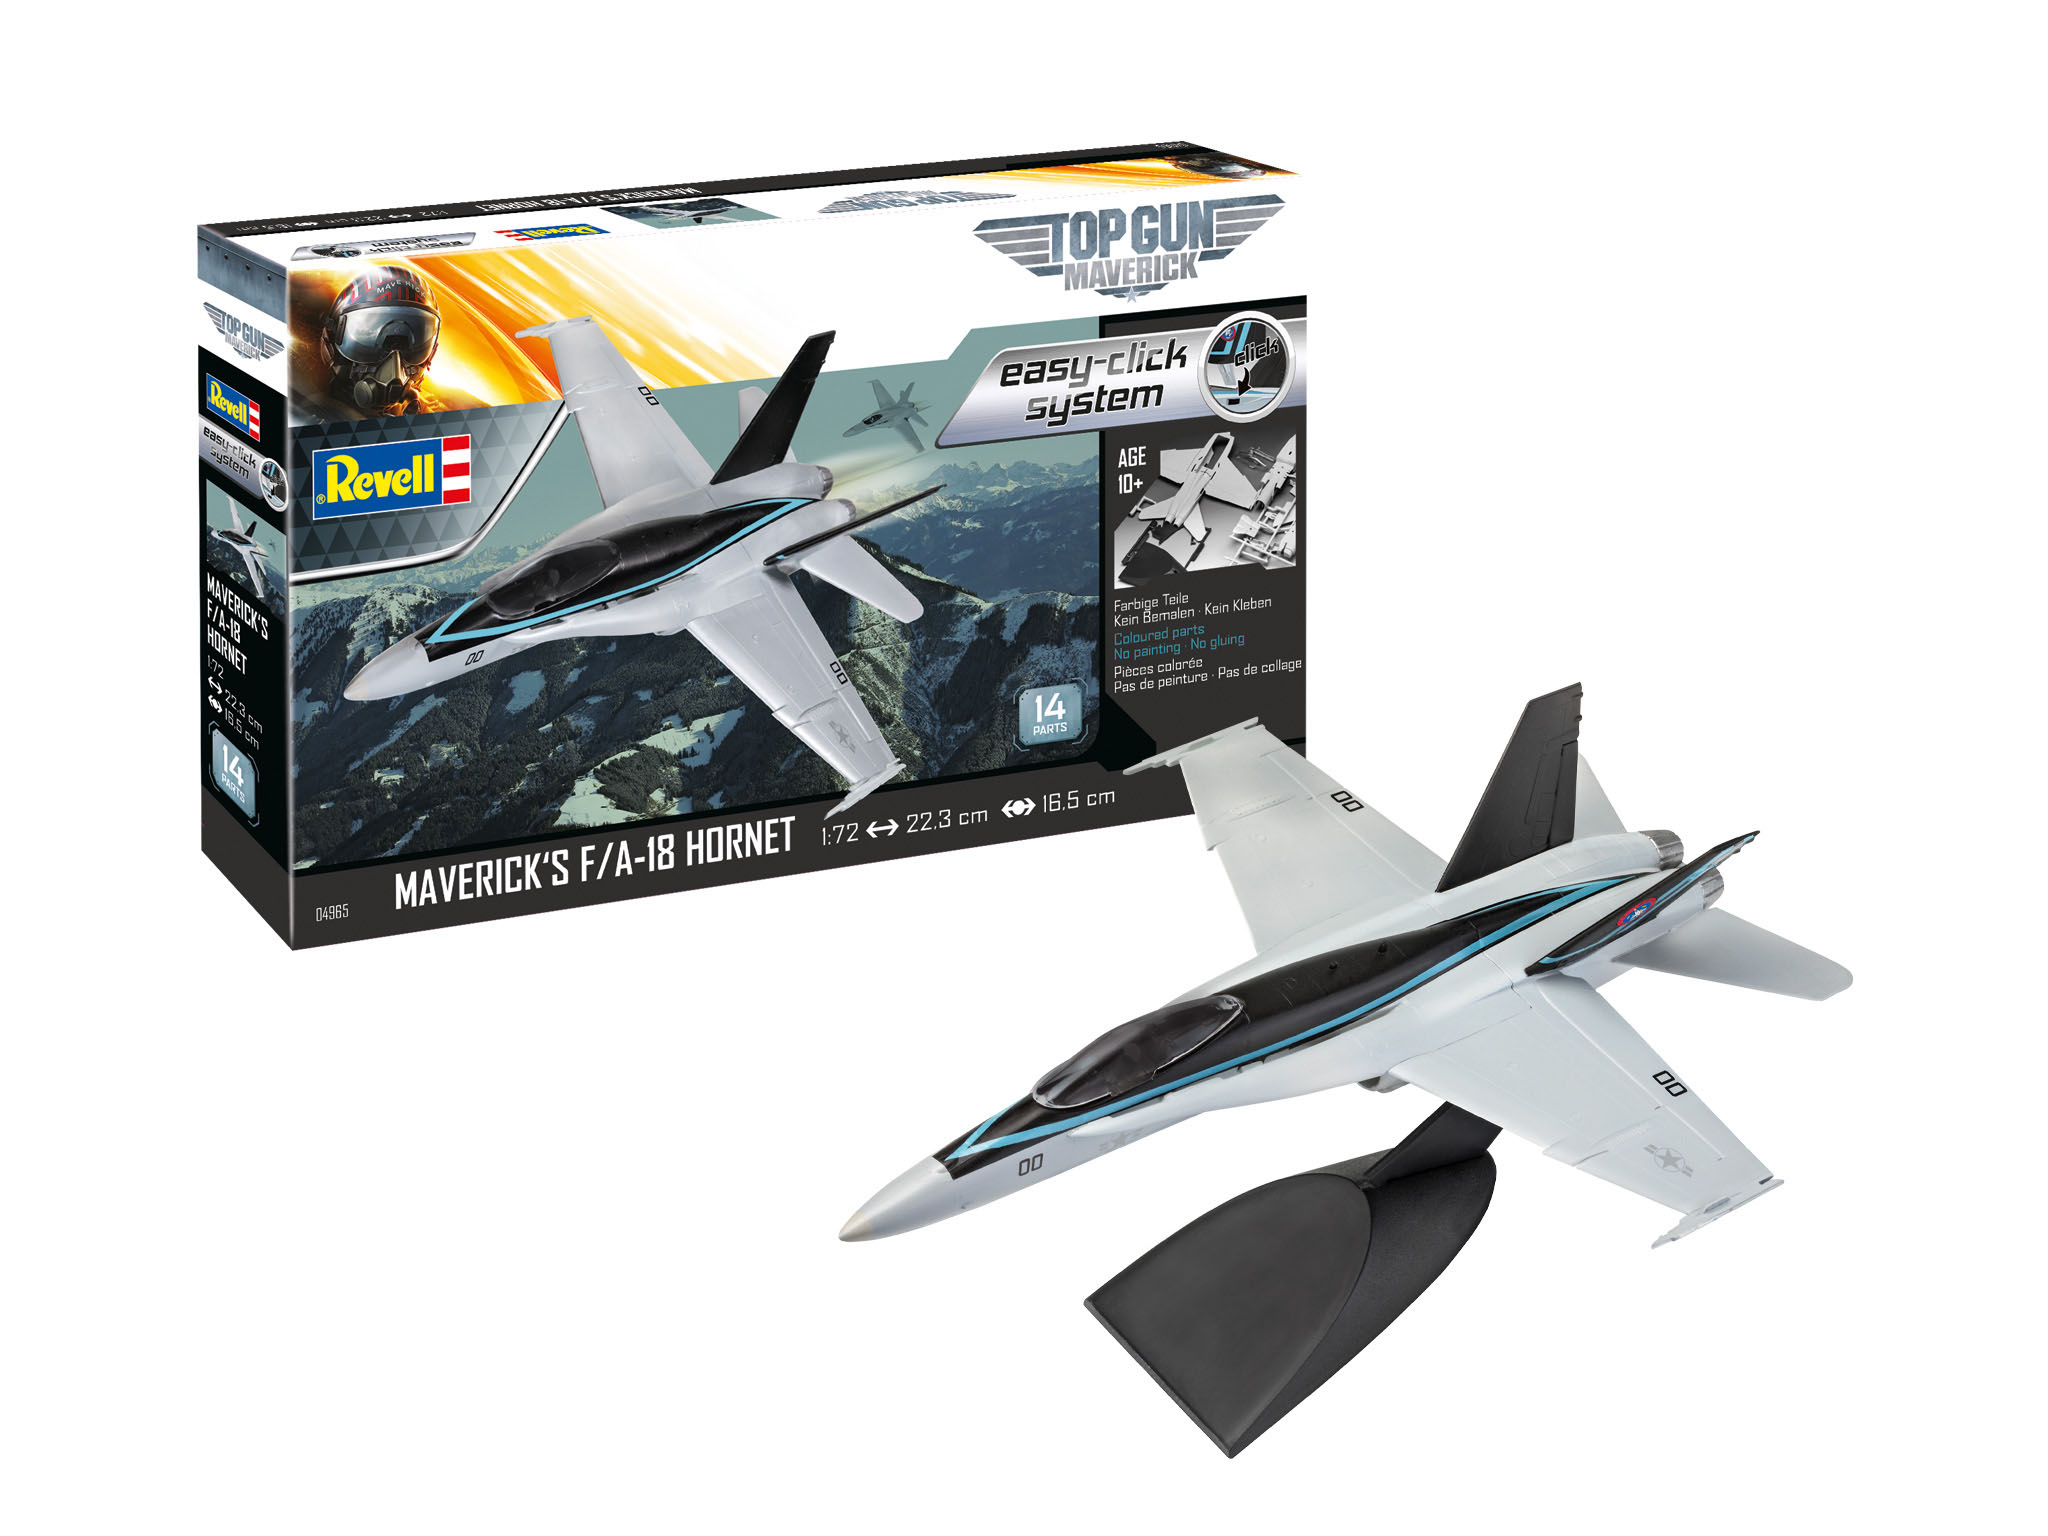 Revell 04965 Maverick's F/A-18 Hornet ‘Top Gun: Maverick’ easy-click